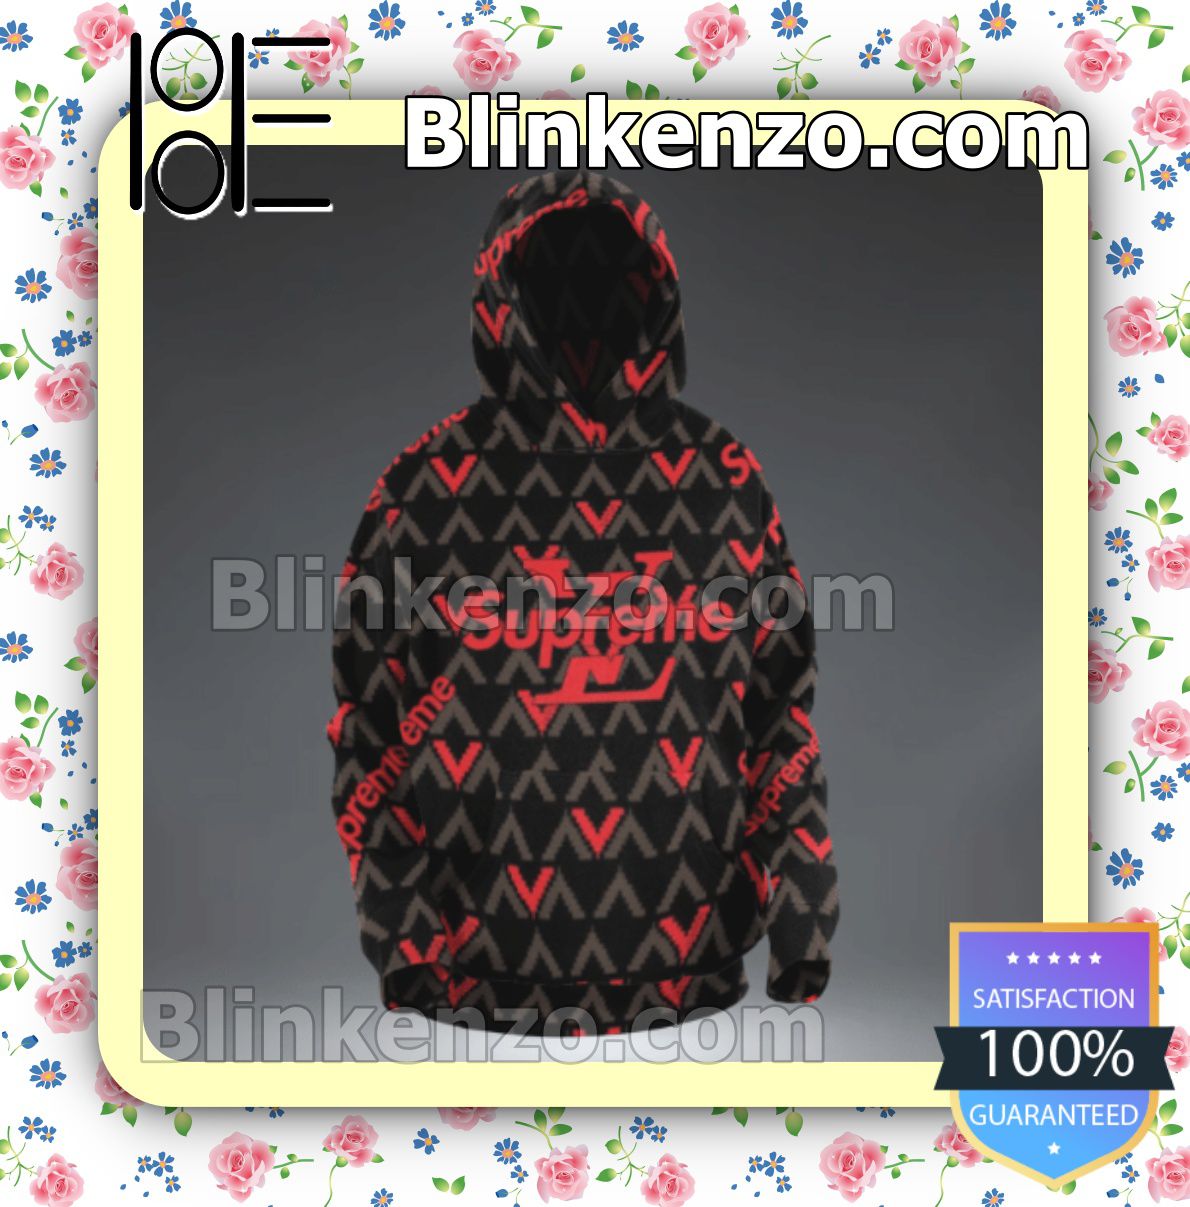 Supreme Louis Vuitton Monogram Red Custom Womens Hoodie - Blinkenzo